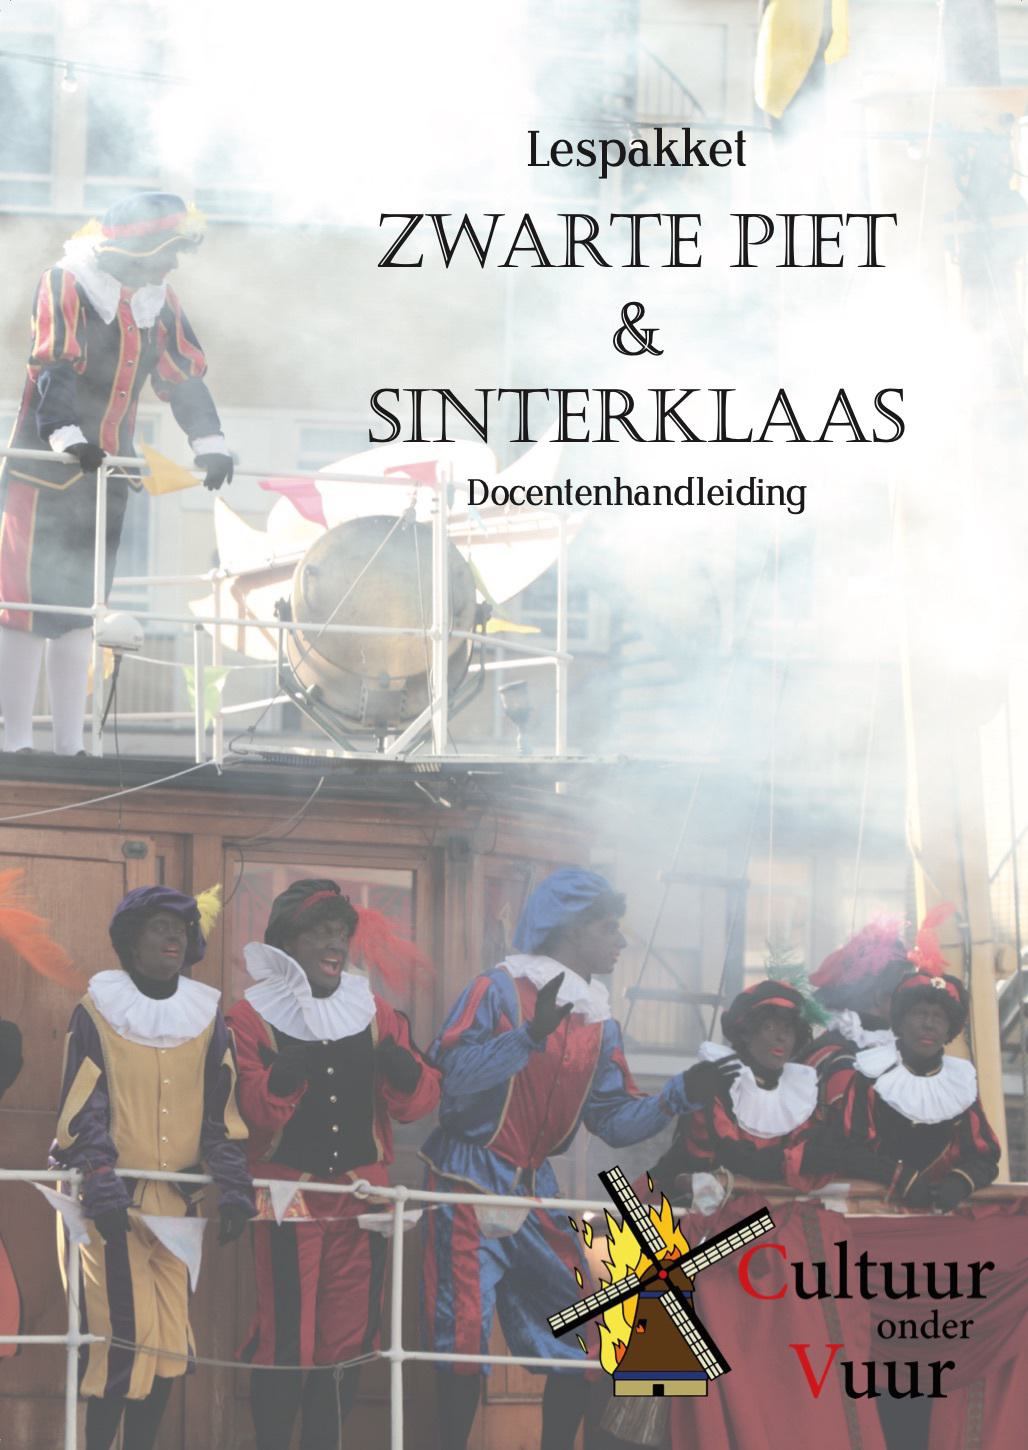 Media pikken Lespakket vóór Zwarte Piet op